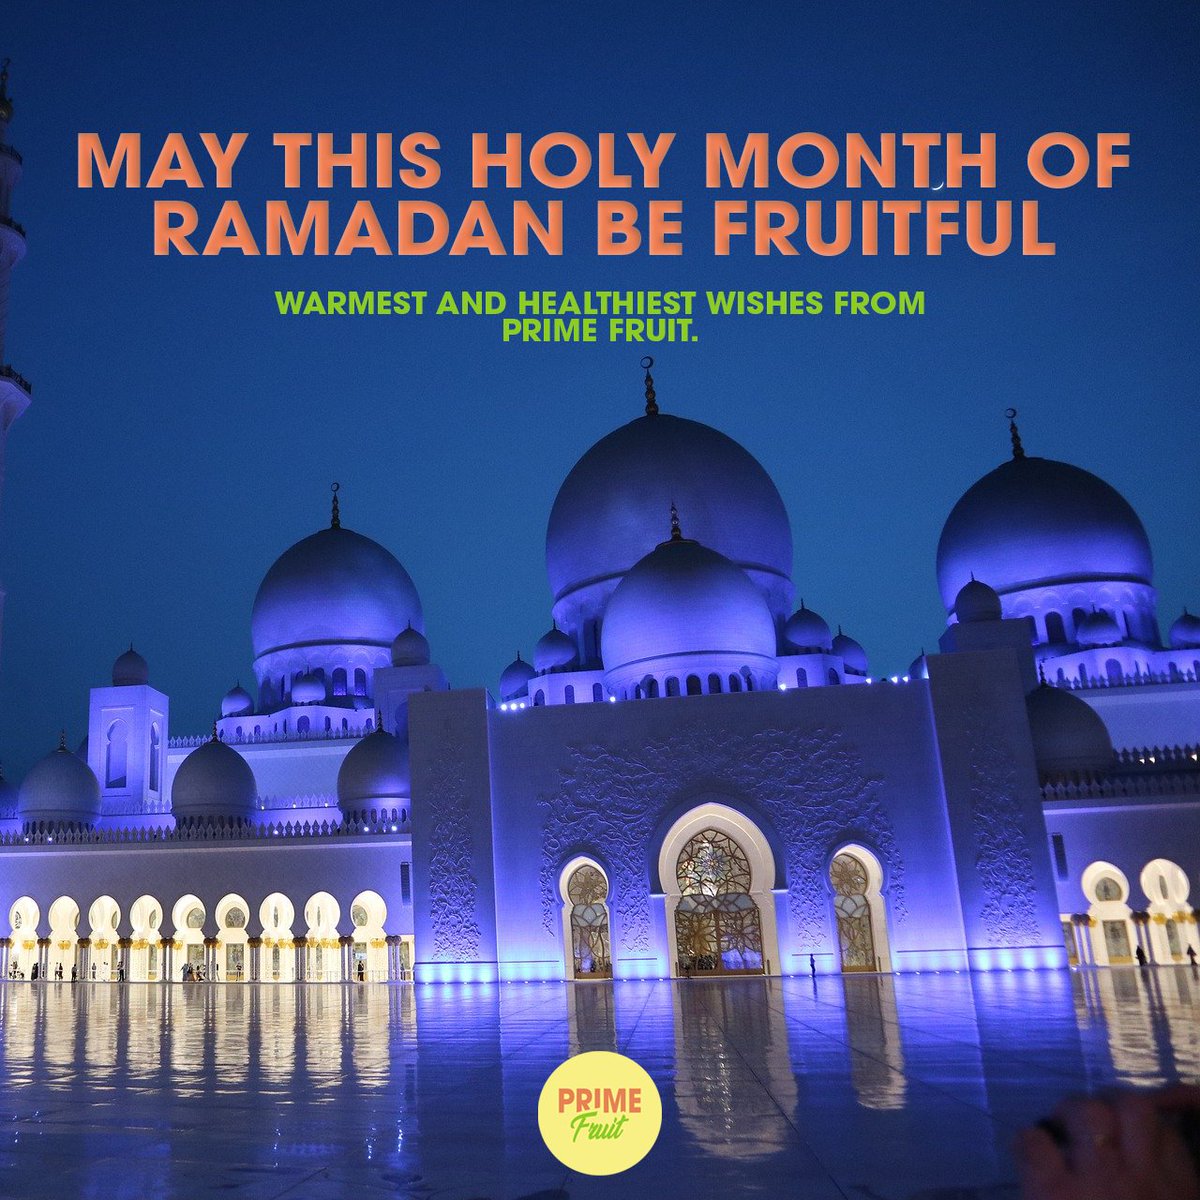 Ramadan Kareem everyone from Prime Fruit! 
This Ramadan, stay home and let us serve you with fresh & healthy fruits delivered to your doorstep.

#DubaiFood #DubaiFoodie #MyDubai  #Talabat
#FruitDelivery #DubaiFruitDelivery #HealthyOffice  #HomeFruitDelivery #Ramadan #Ramadan2020